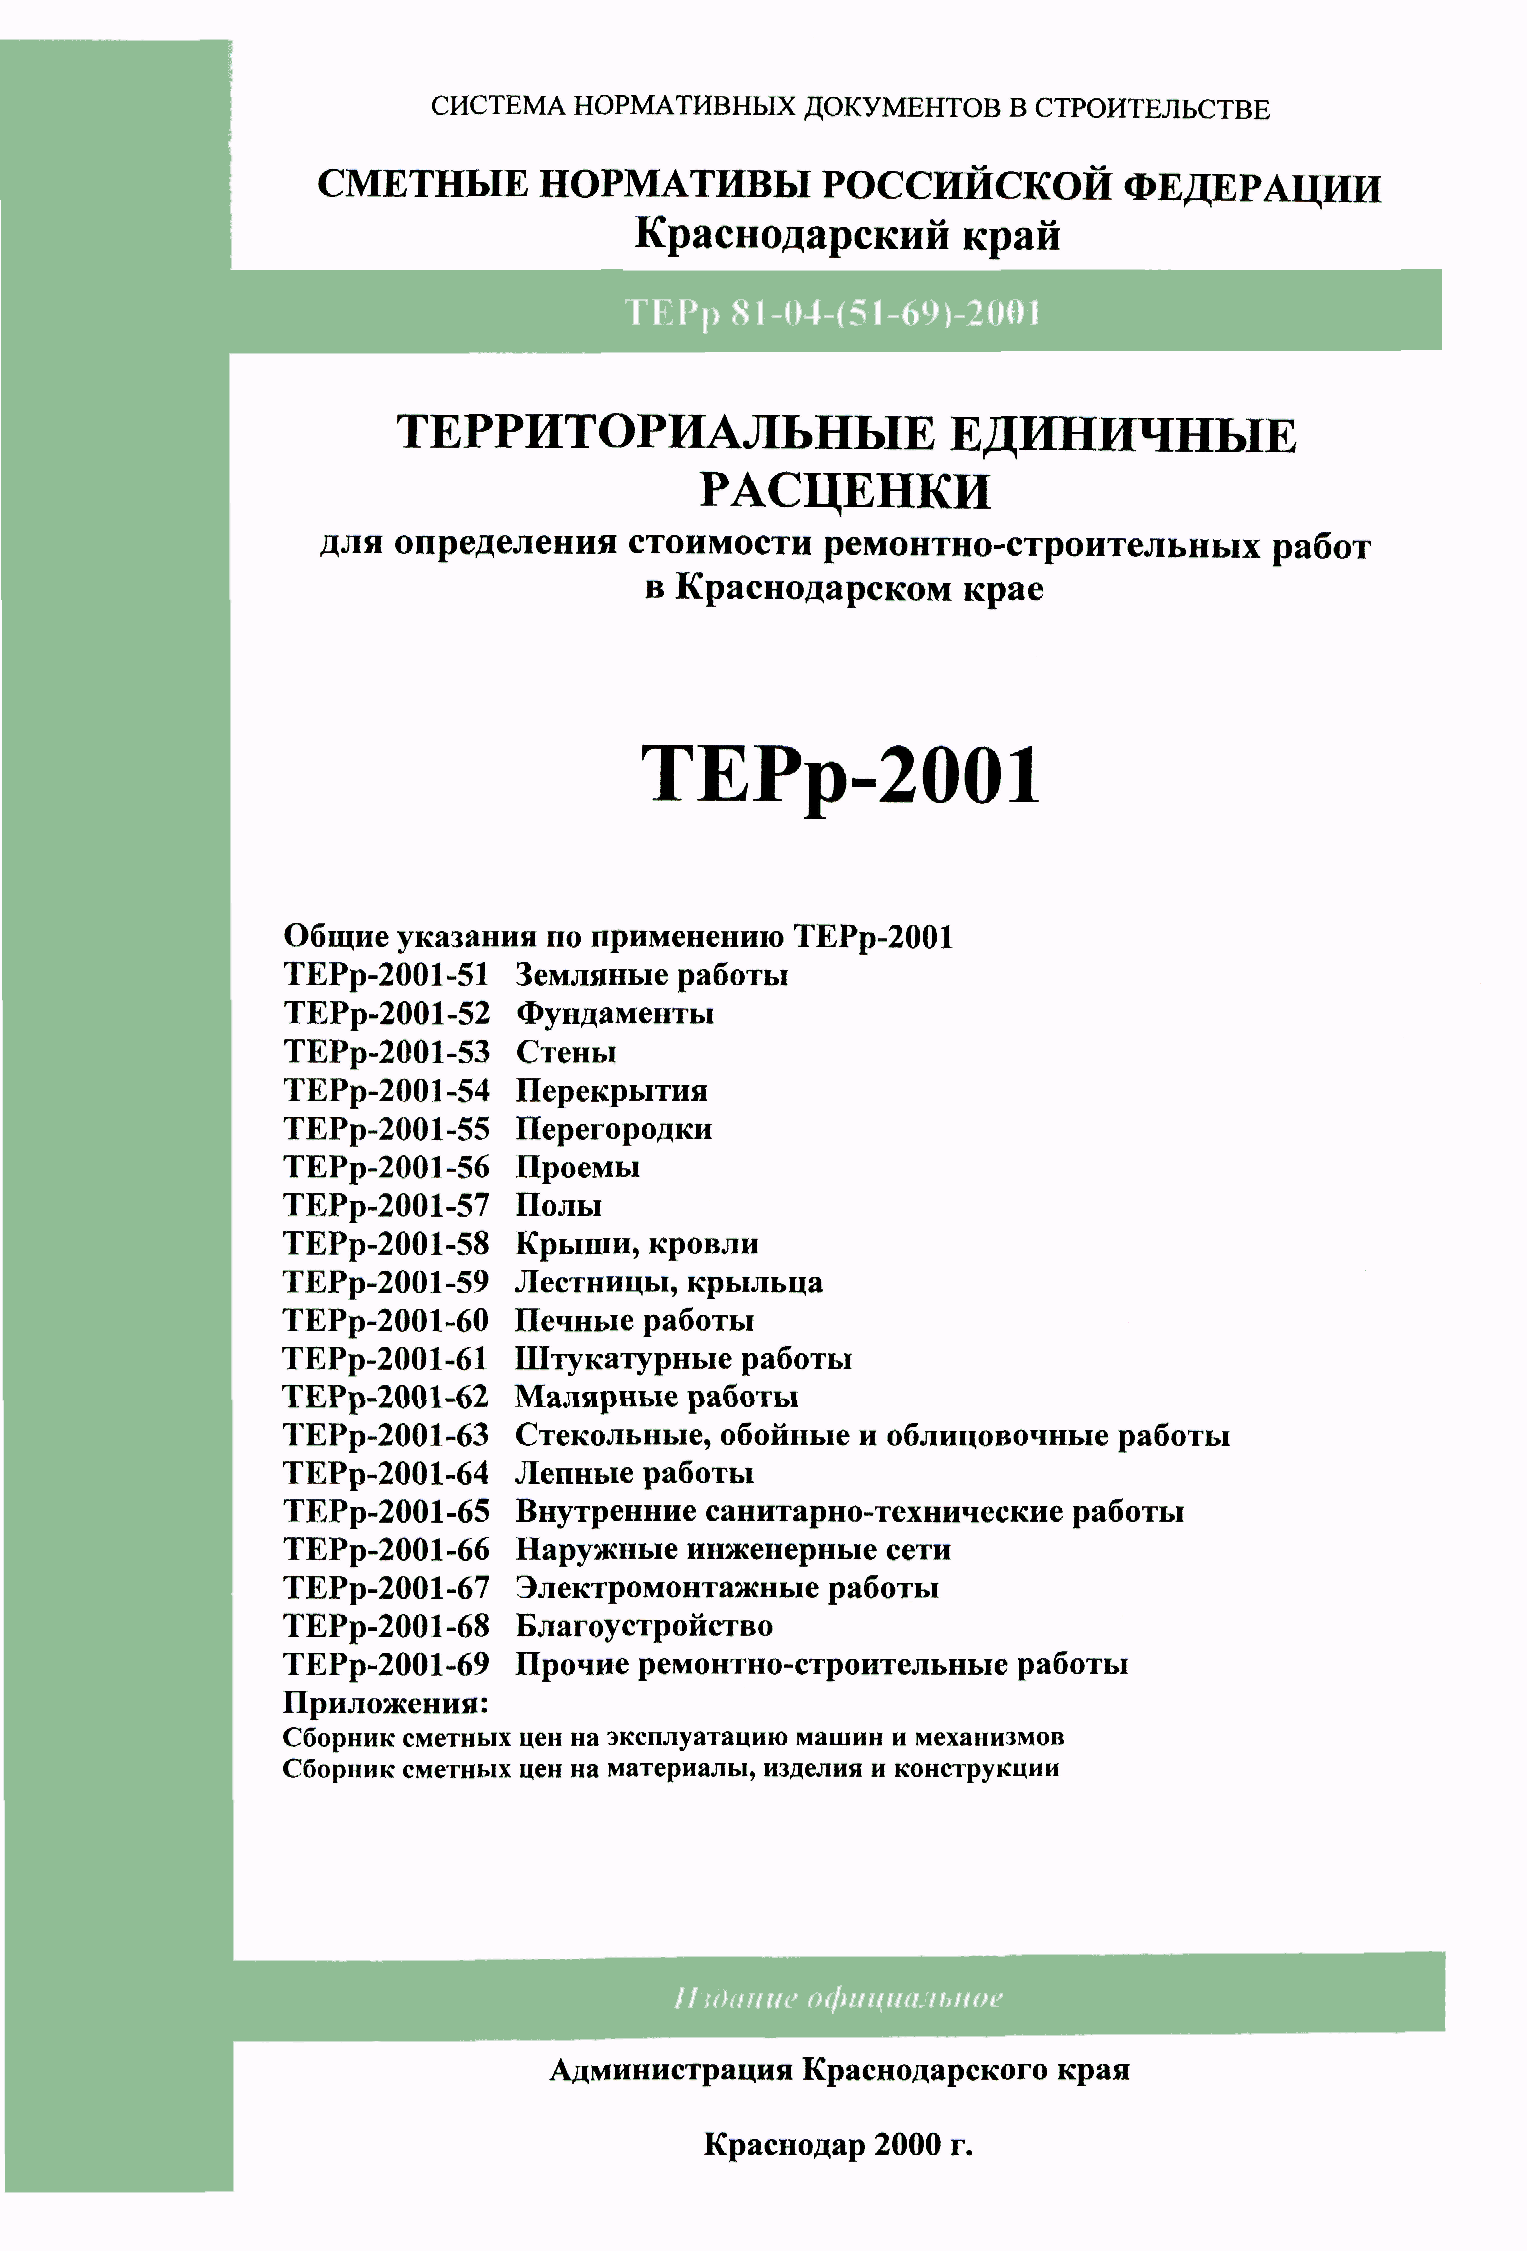 ТЕРр Краснодарский край 2001-68